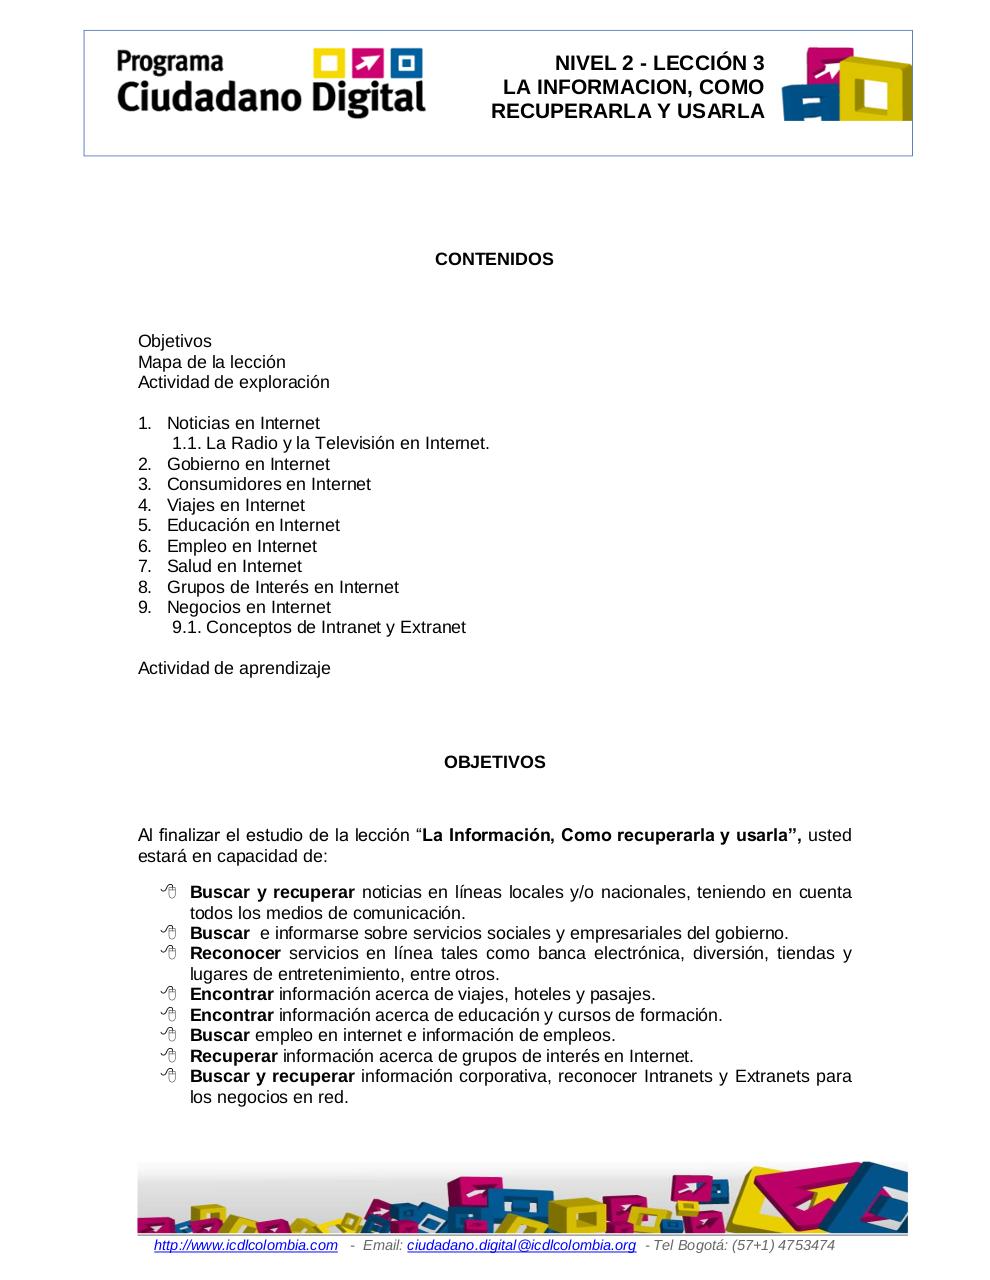 Vista previa del archivo PDF ciudadanodigital-niv2lec3.pdf